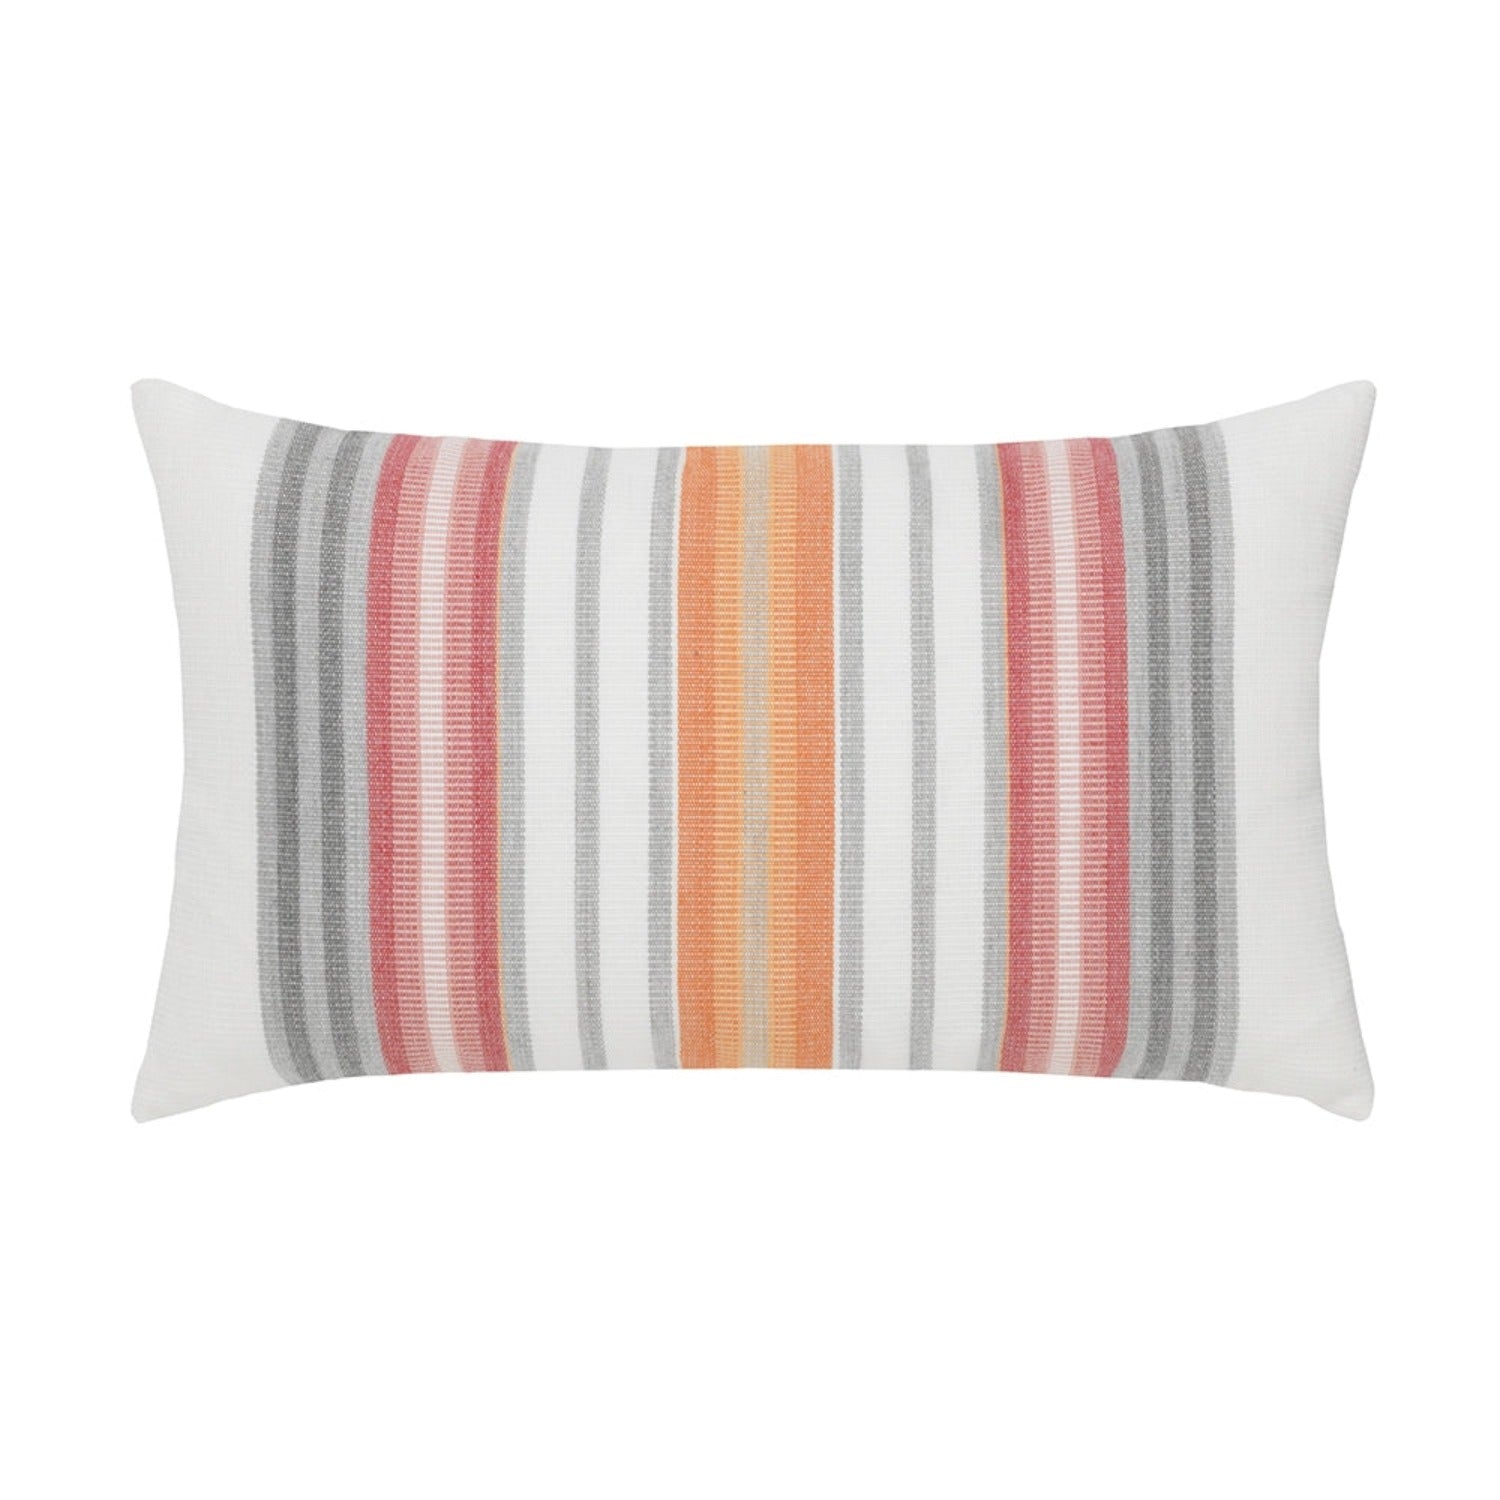 Elaine Smith 12" x 20" Lumbar Outdoor Pillow - Sherbet Stripe - Polyester Fiber Fill Throw Pillows 12030978